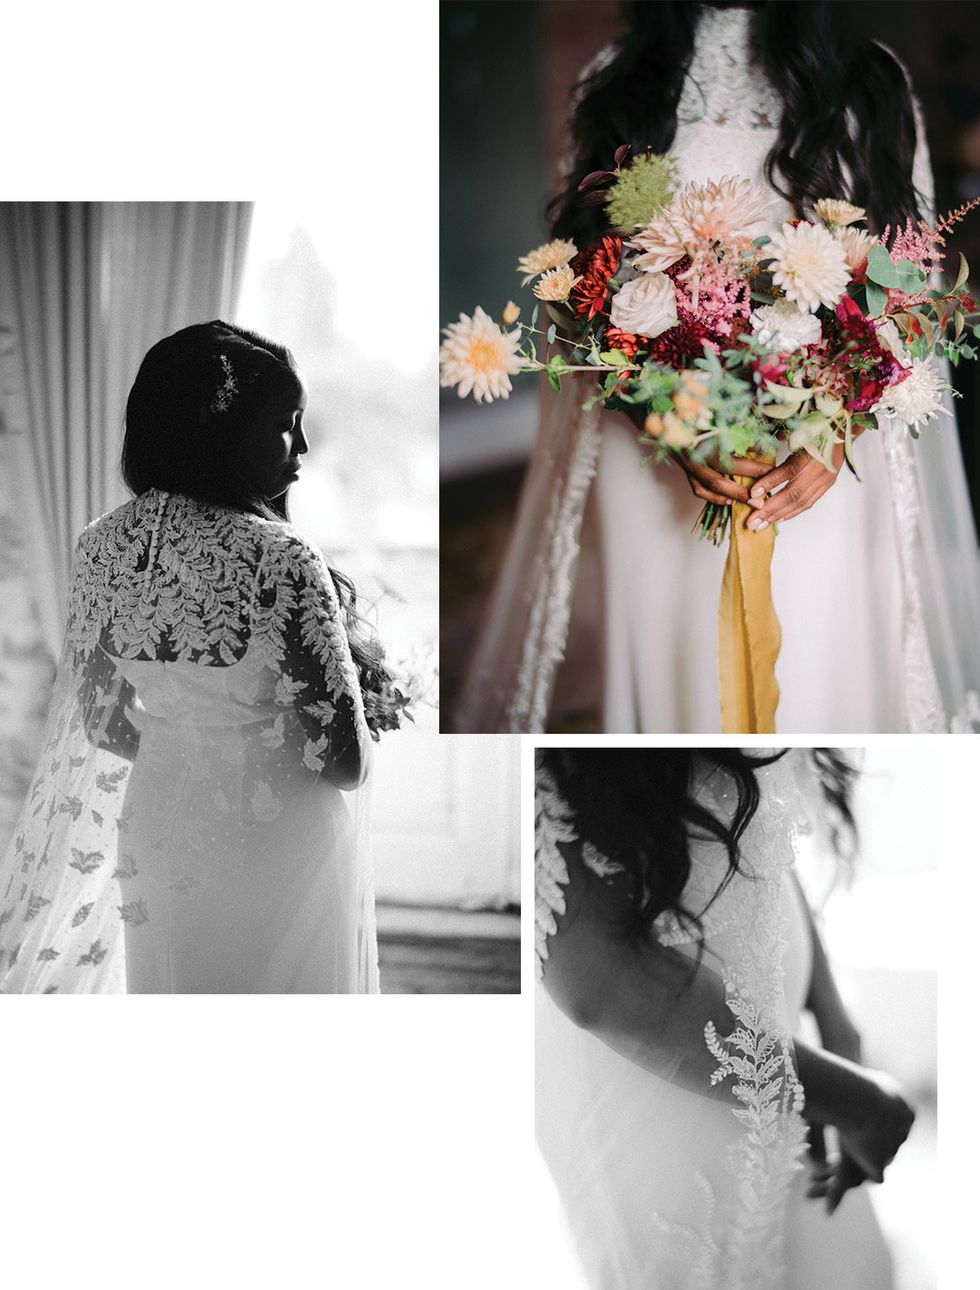 the details of zim flores' wedding dress